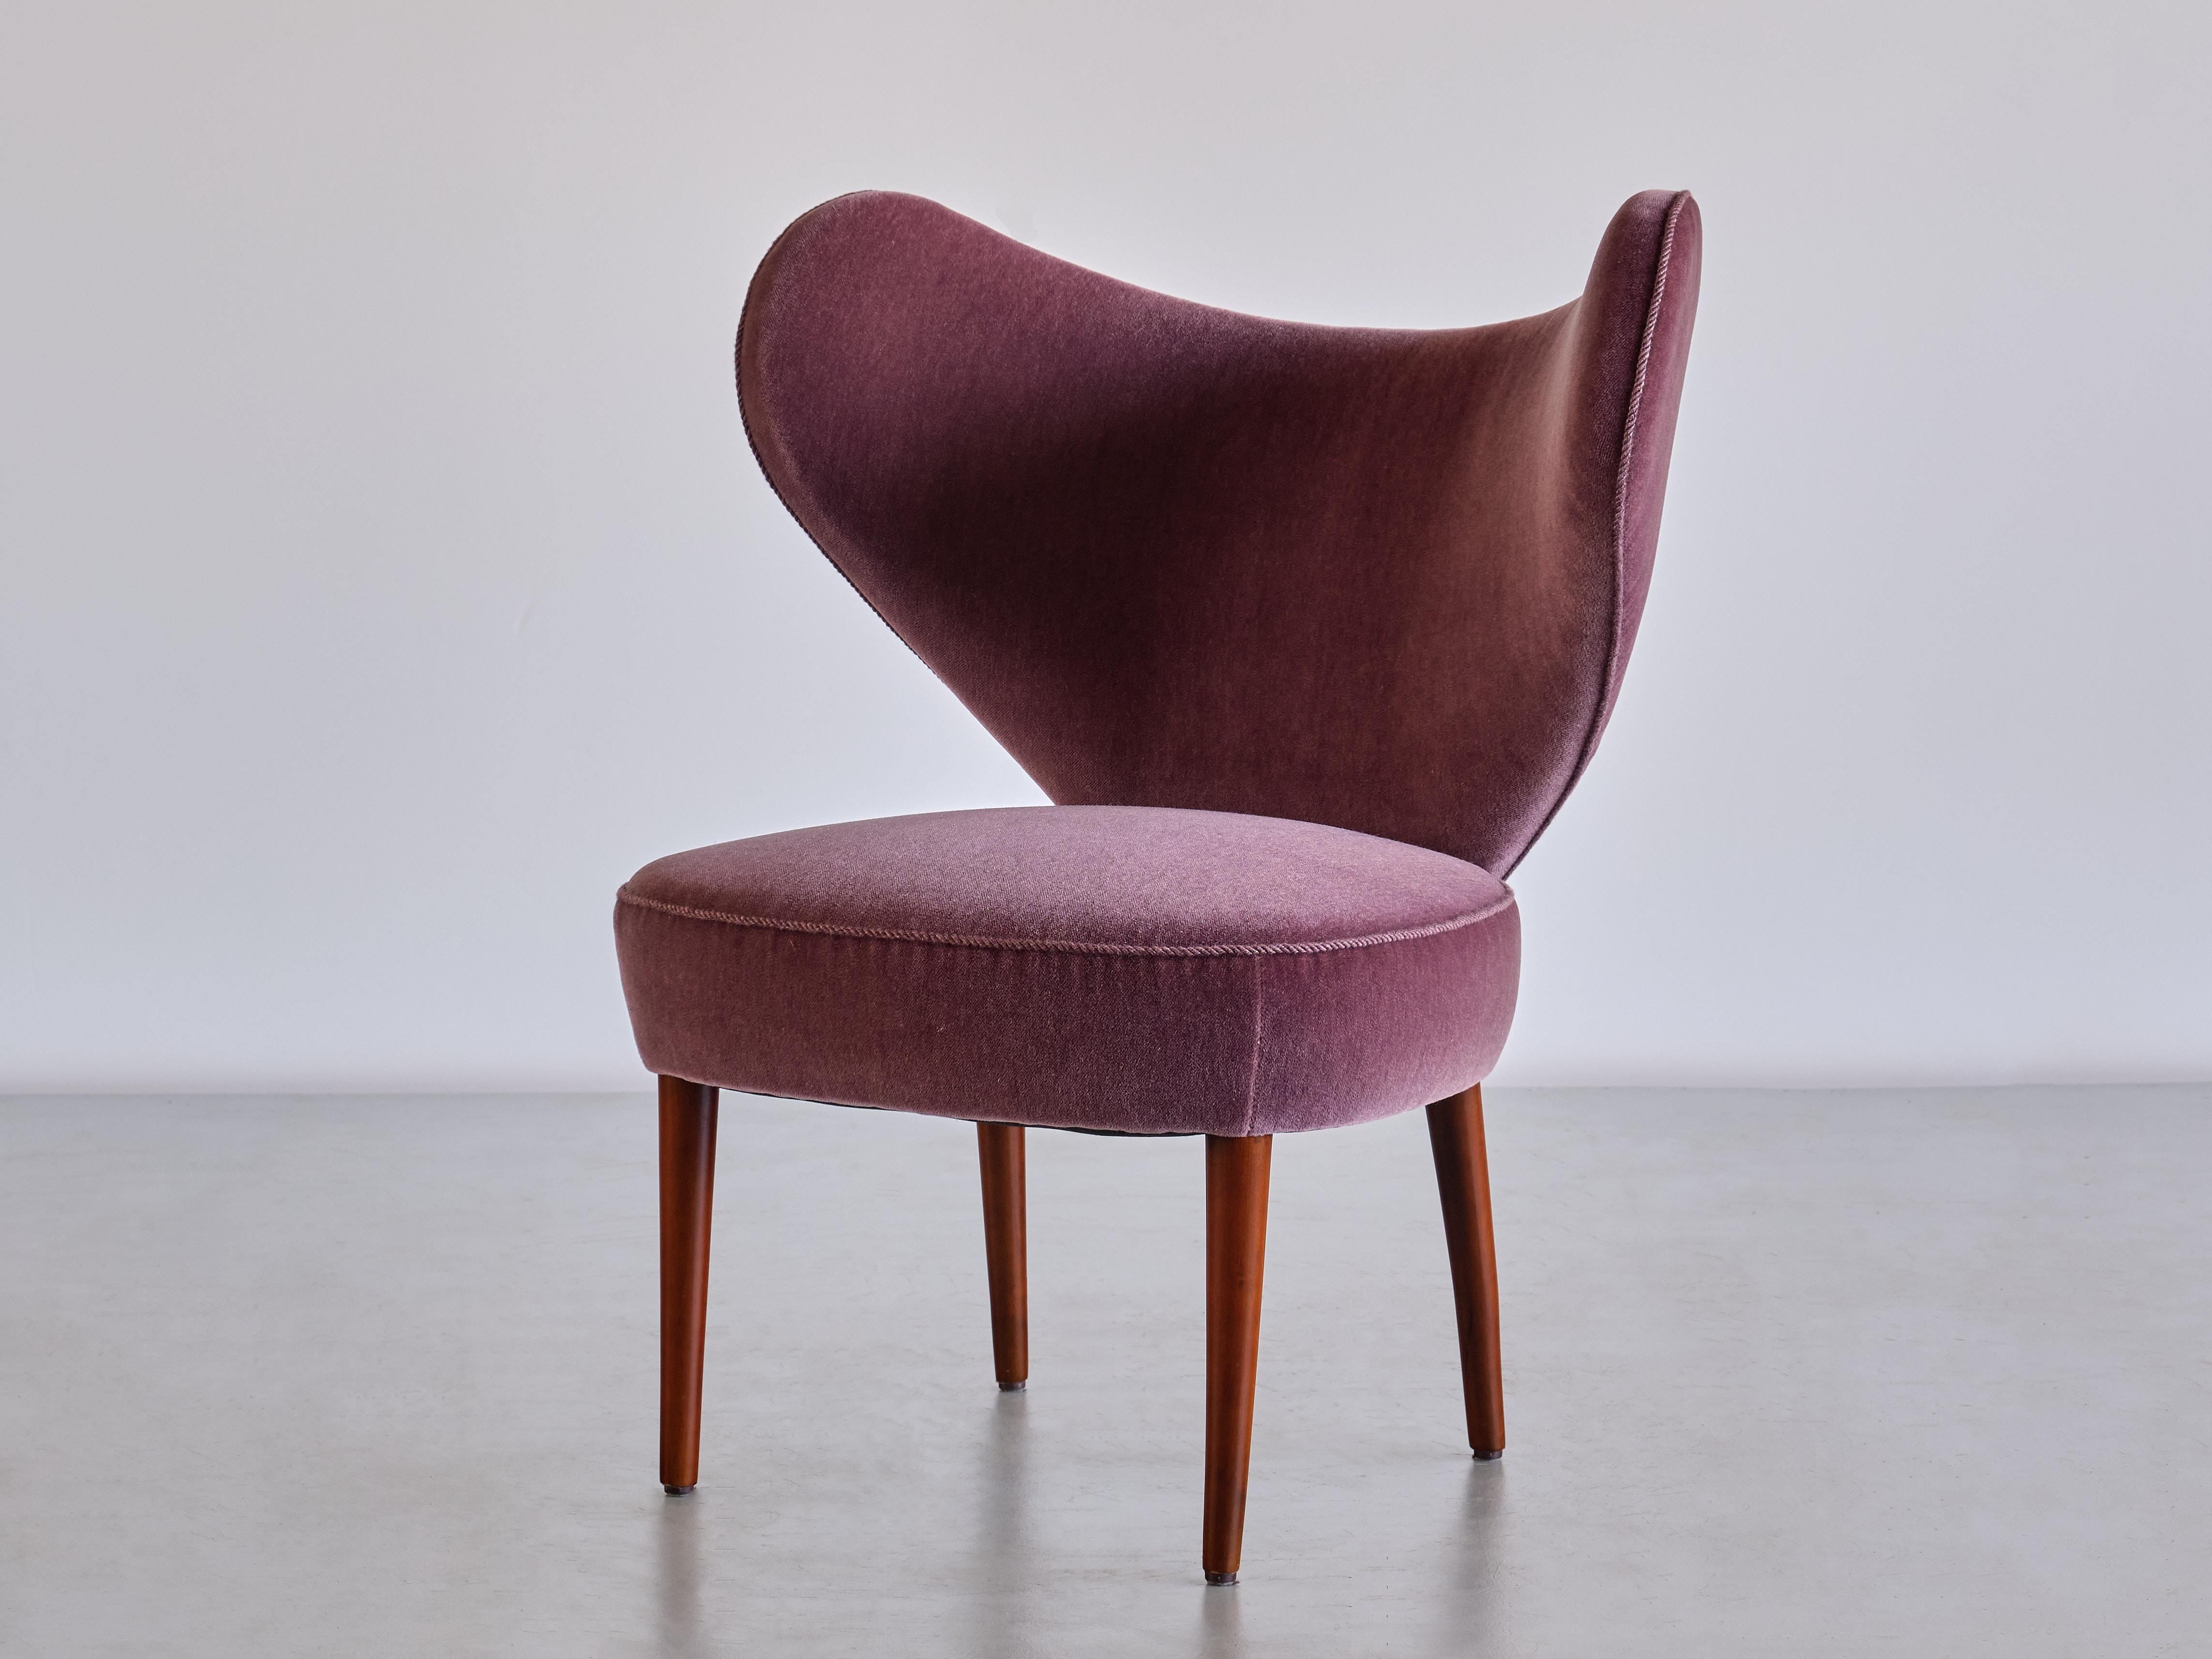 Exceptional 'Heart' Chair in Purple Mohair, Brøndbyøster Møbel, Denmark, 1953 For Sale 7